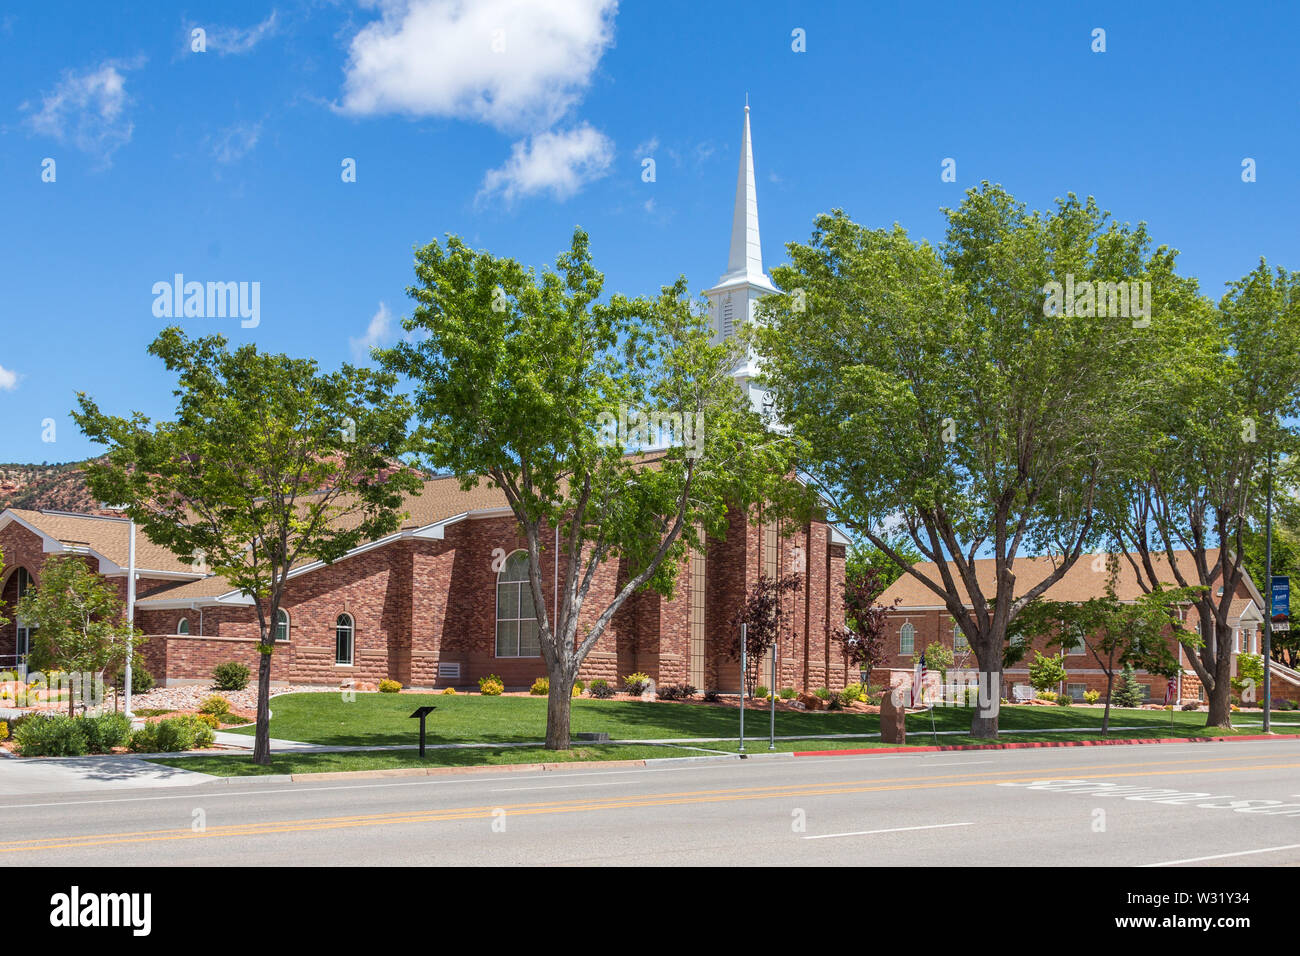 KANAB, UTAH, USA - MAY 25, 2015: Street view of Kanab town in Utah USA Stock Photo